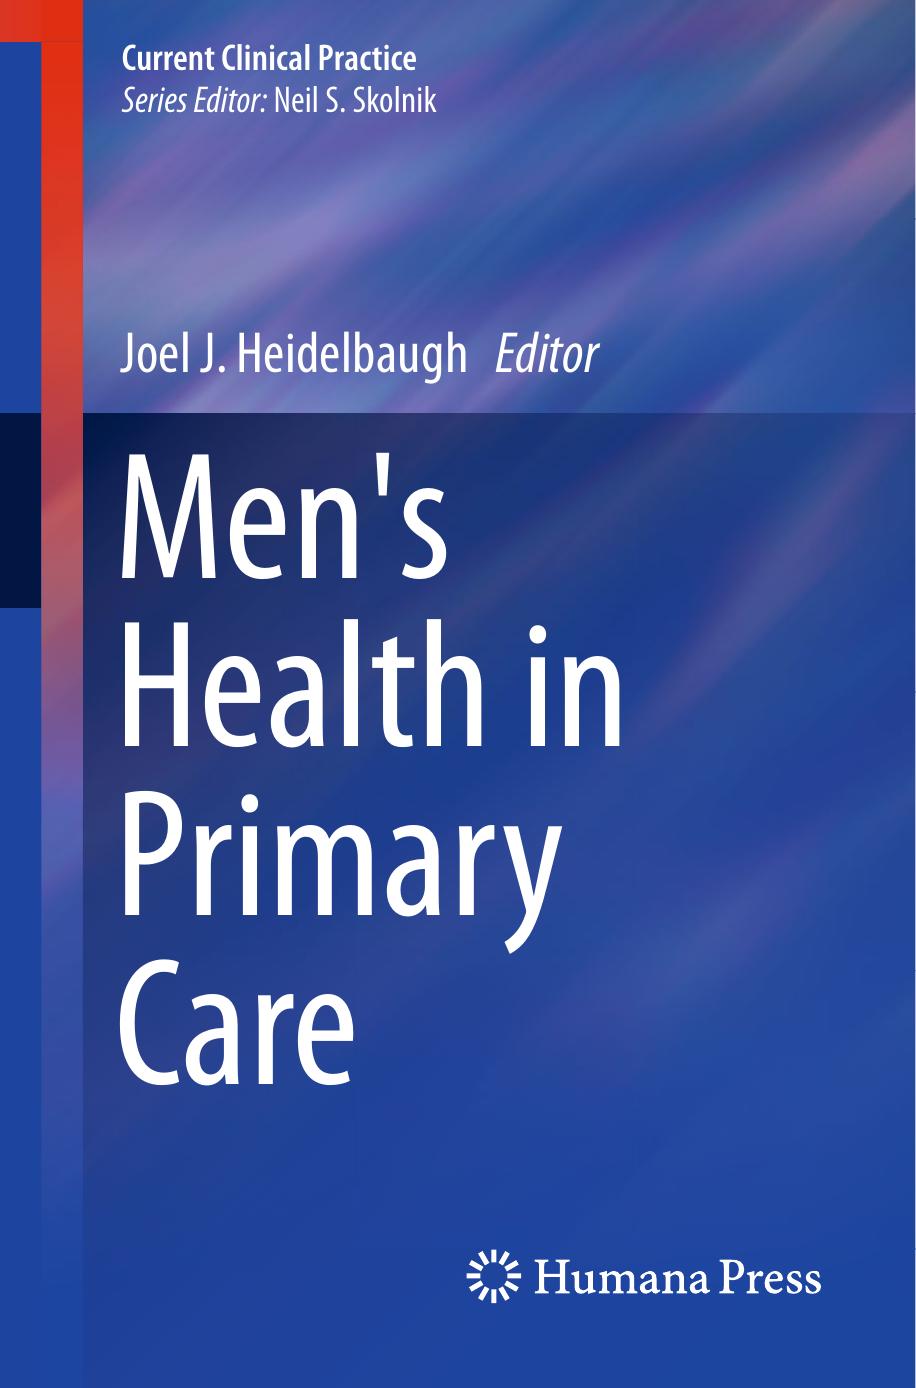 Men's Health in Primary Care 2016